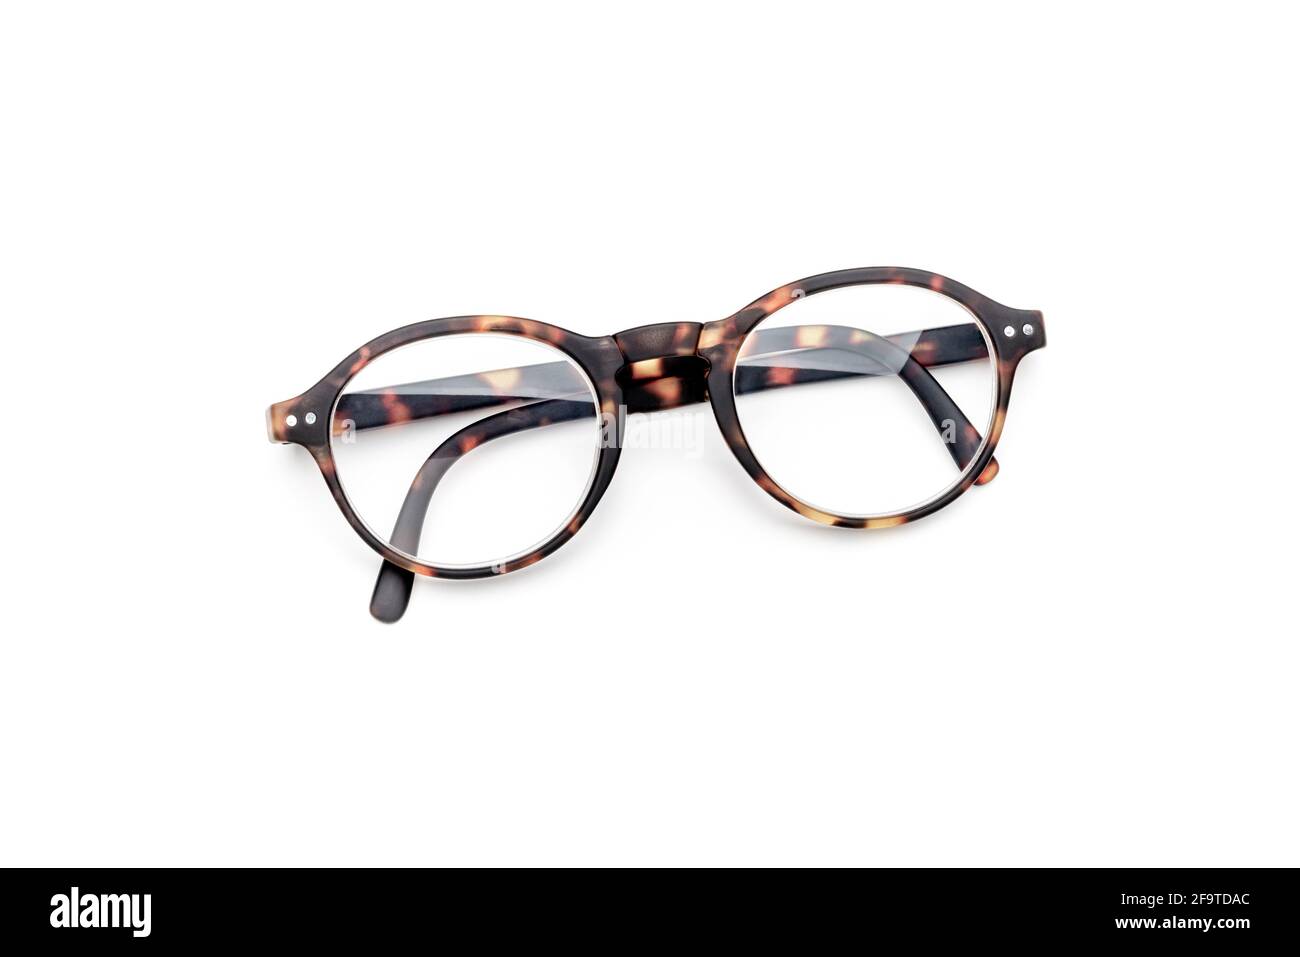 Moderni occhiali pieghevoli tartaruga, o occhiali pieghevoli occhiali da vista, isolati su uno sfondo bianco Foto Stock